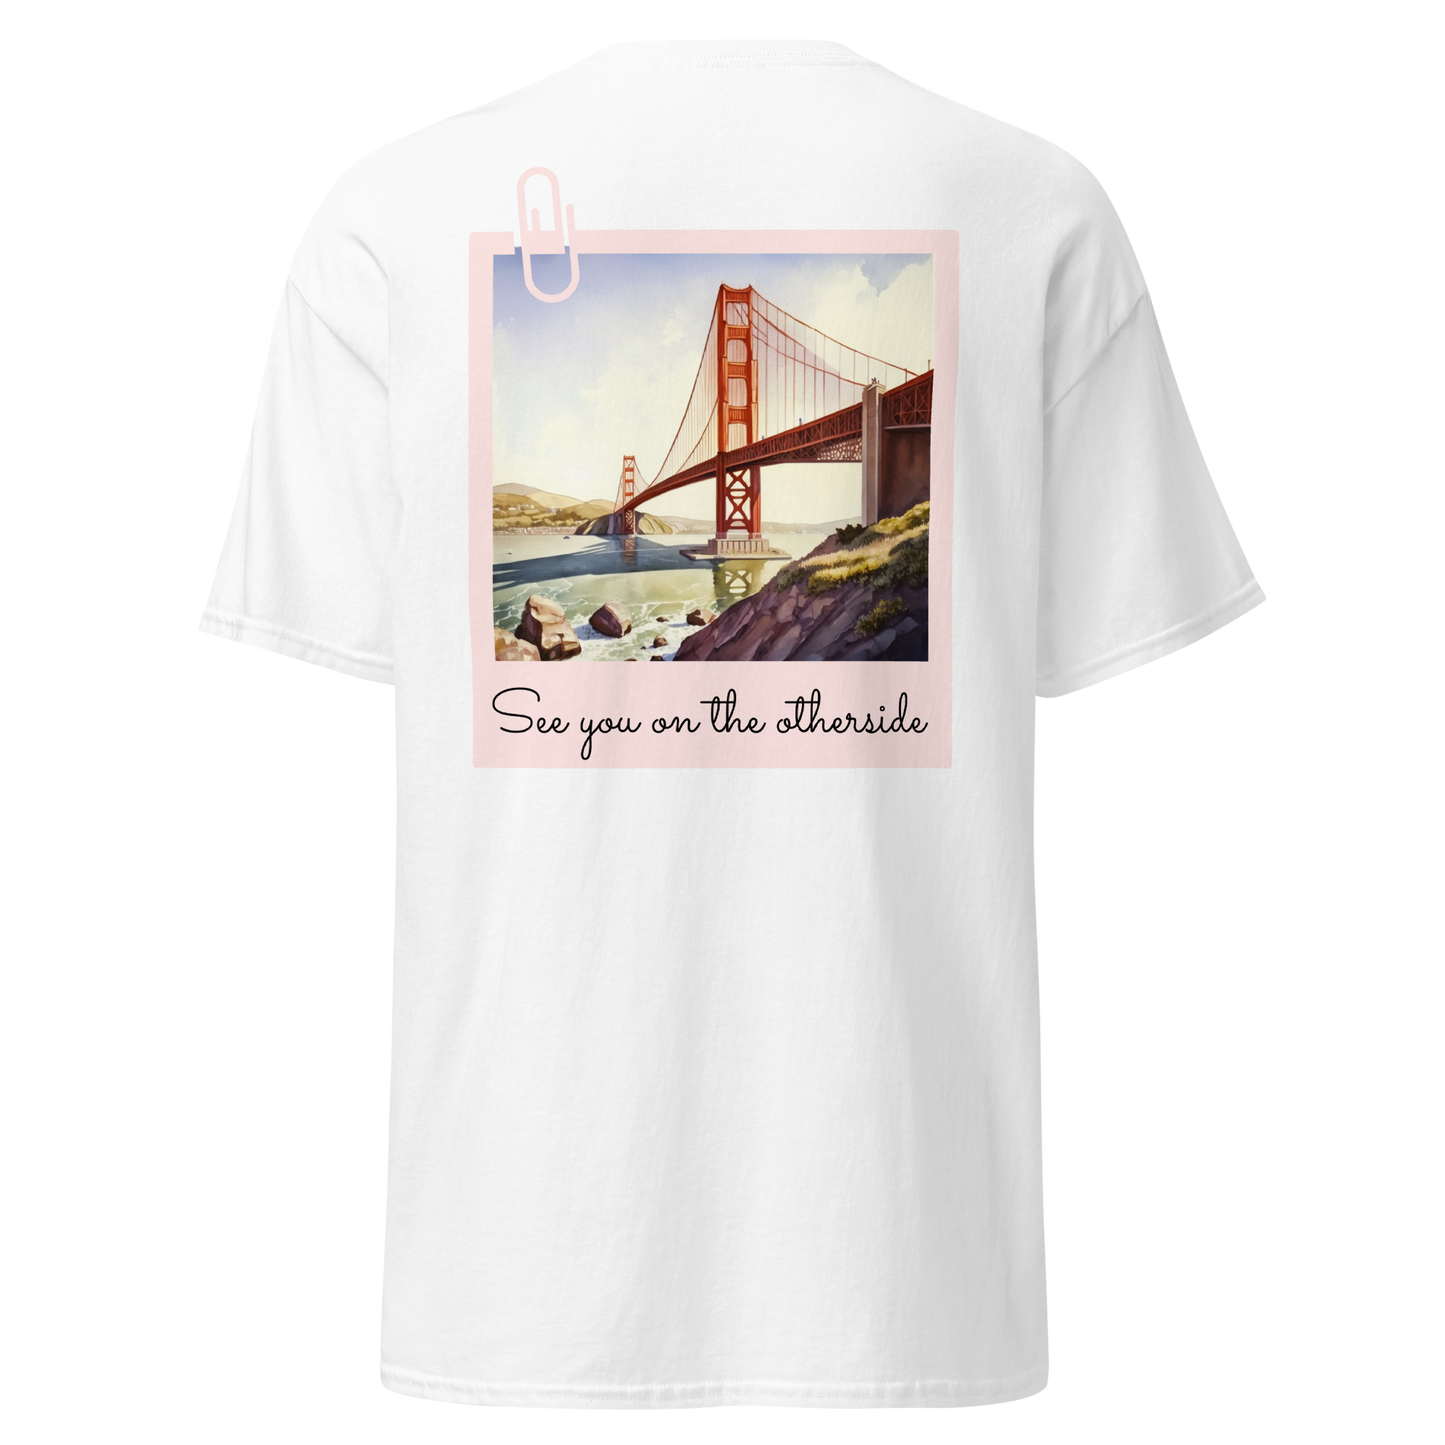 Golden Gate Gateway: Graphic Tee Celebrating an Iconic Landmark